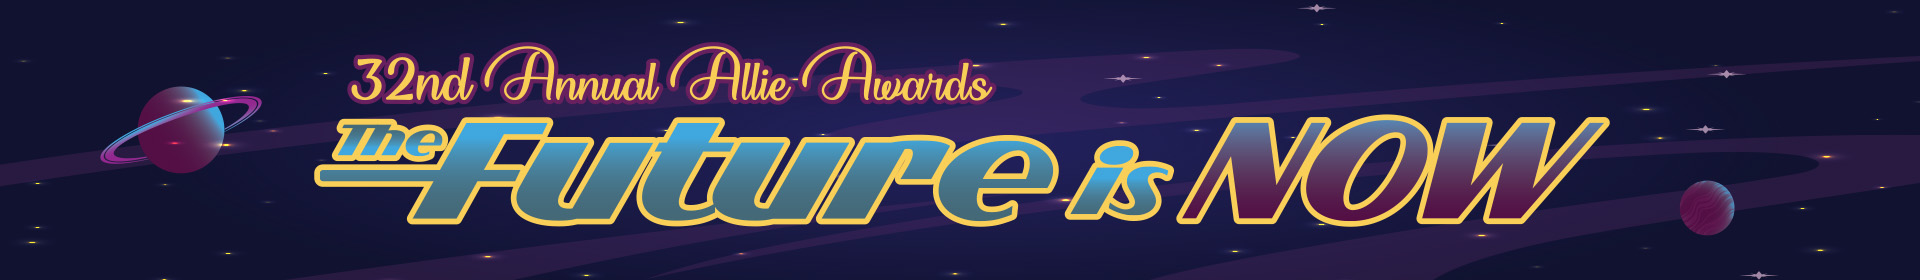 2022 Allie Awards Event Banner